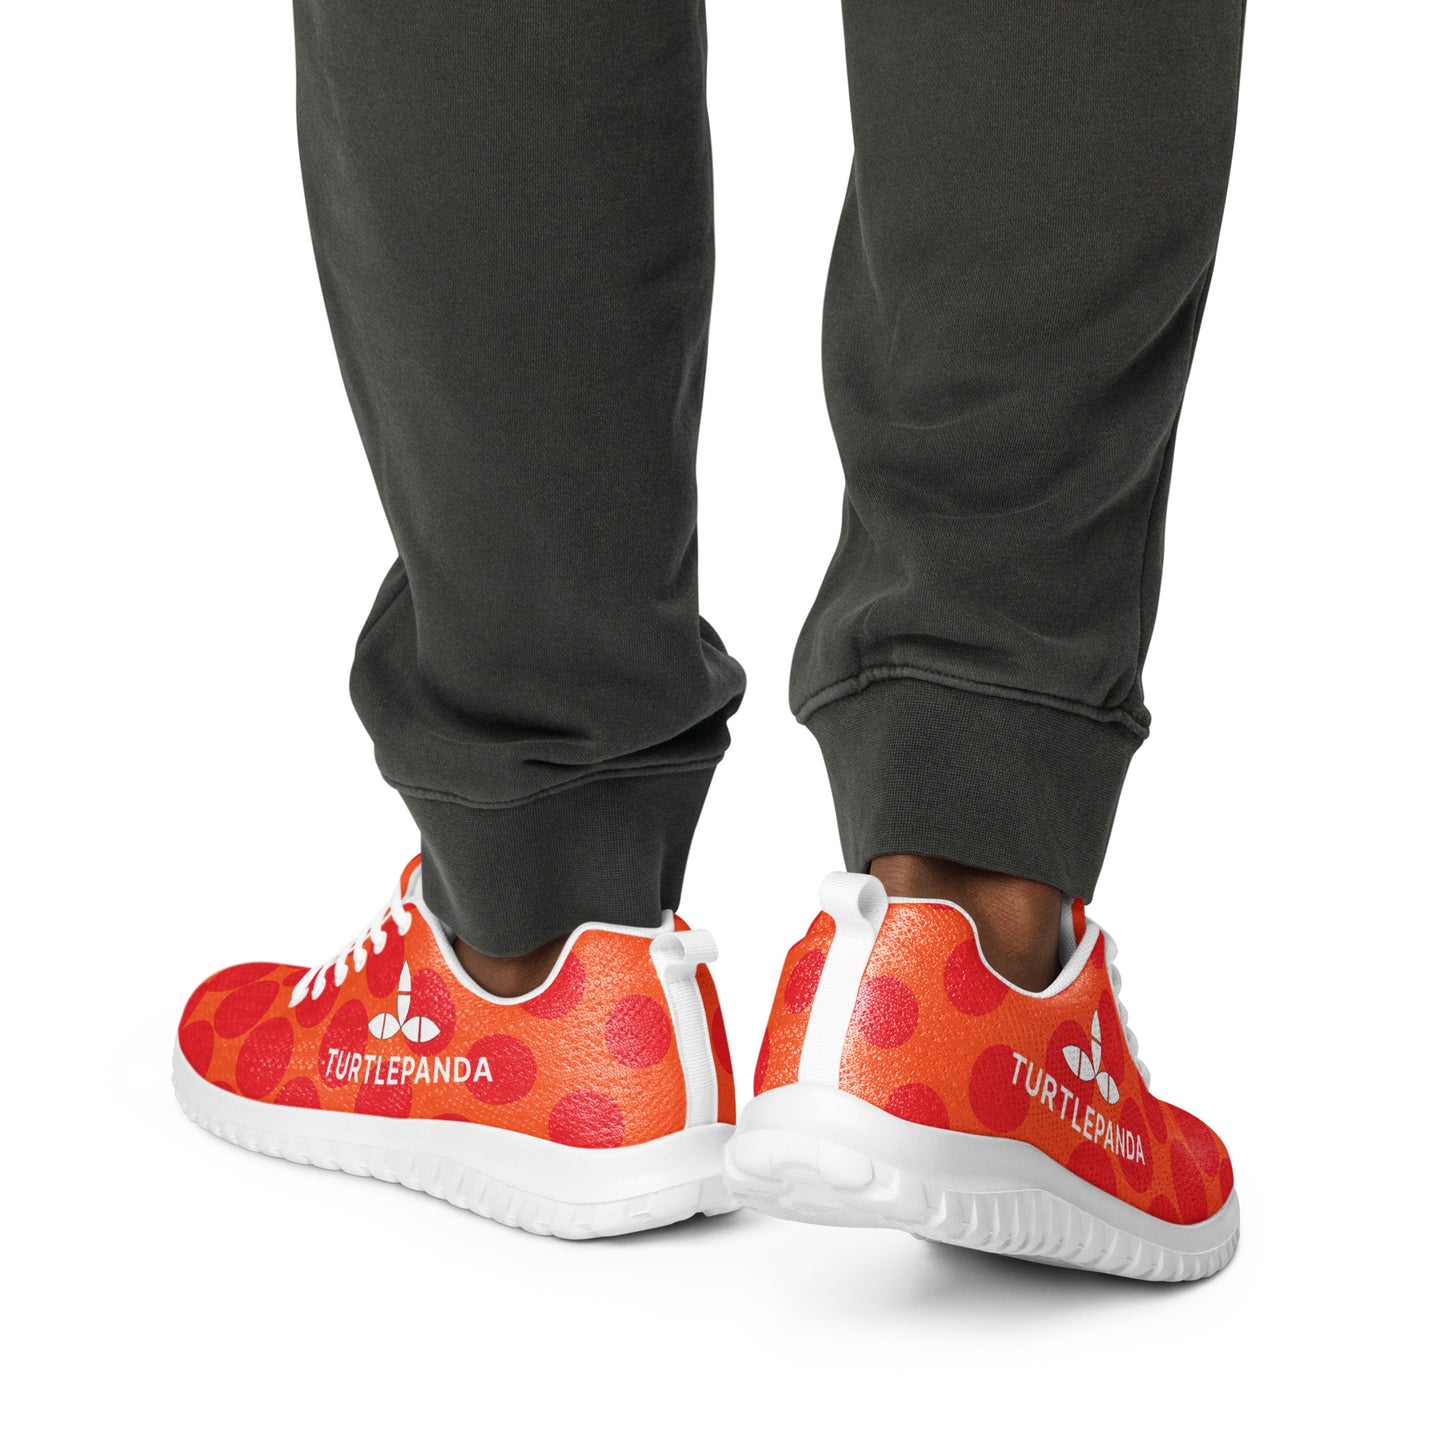 mens-athletic-shoes-orange sneekers-front-65ae200b1d551